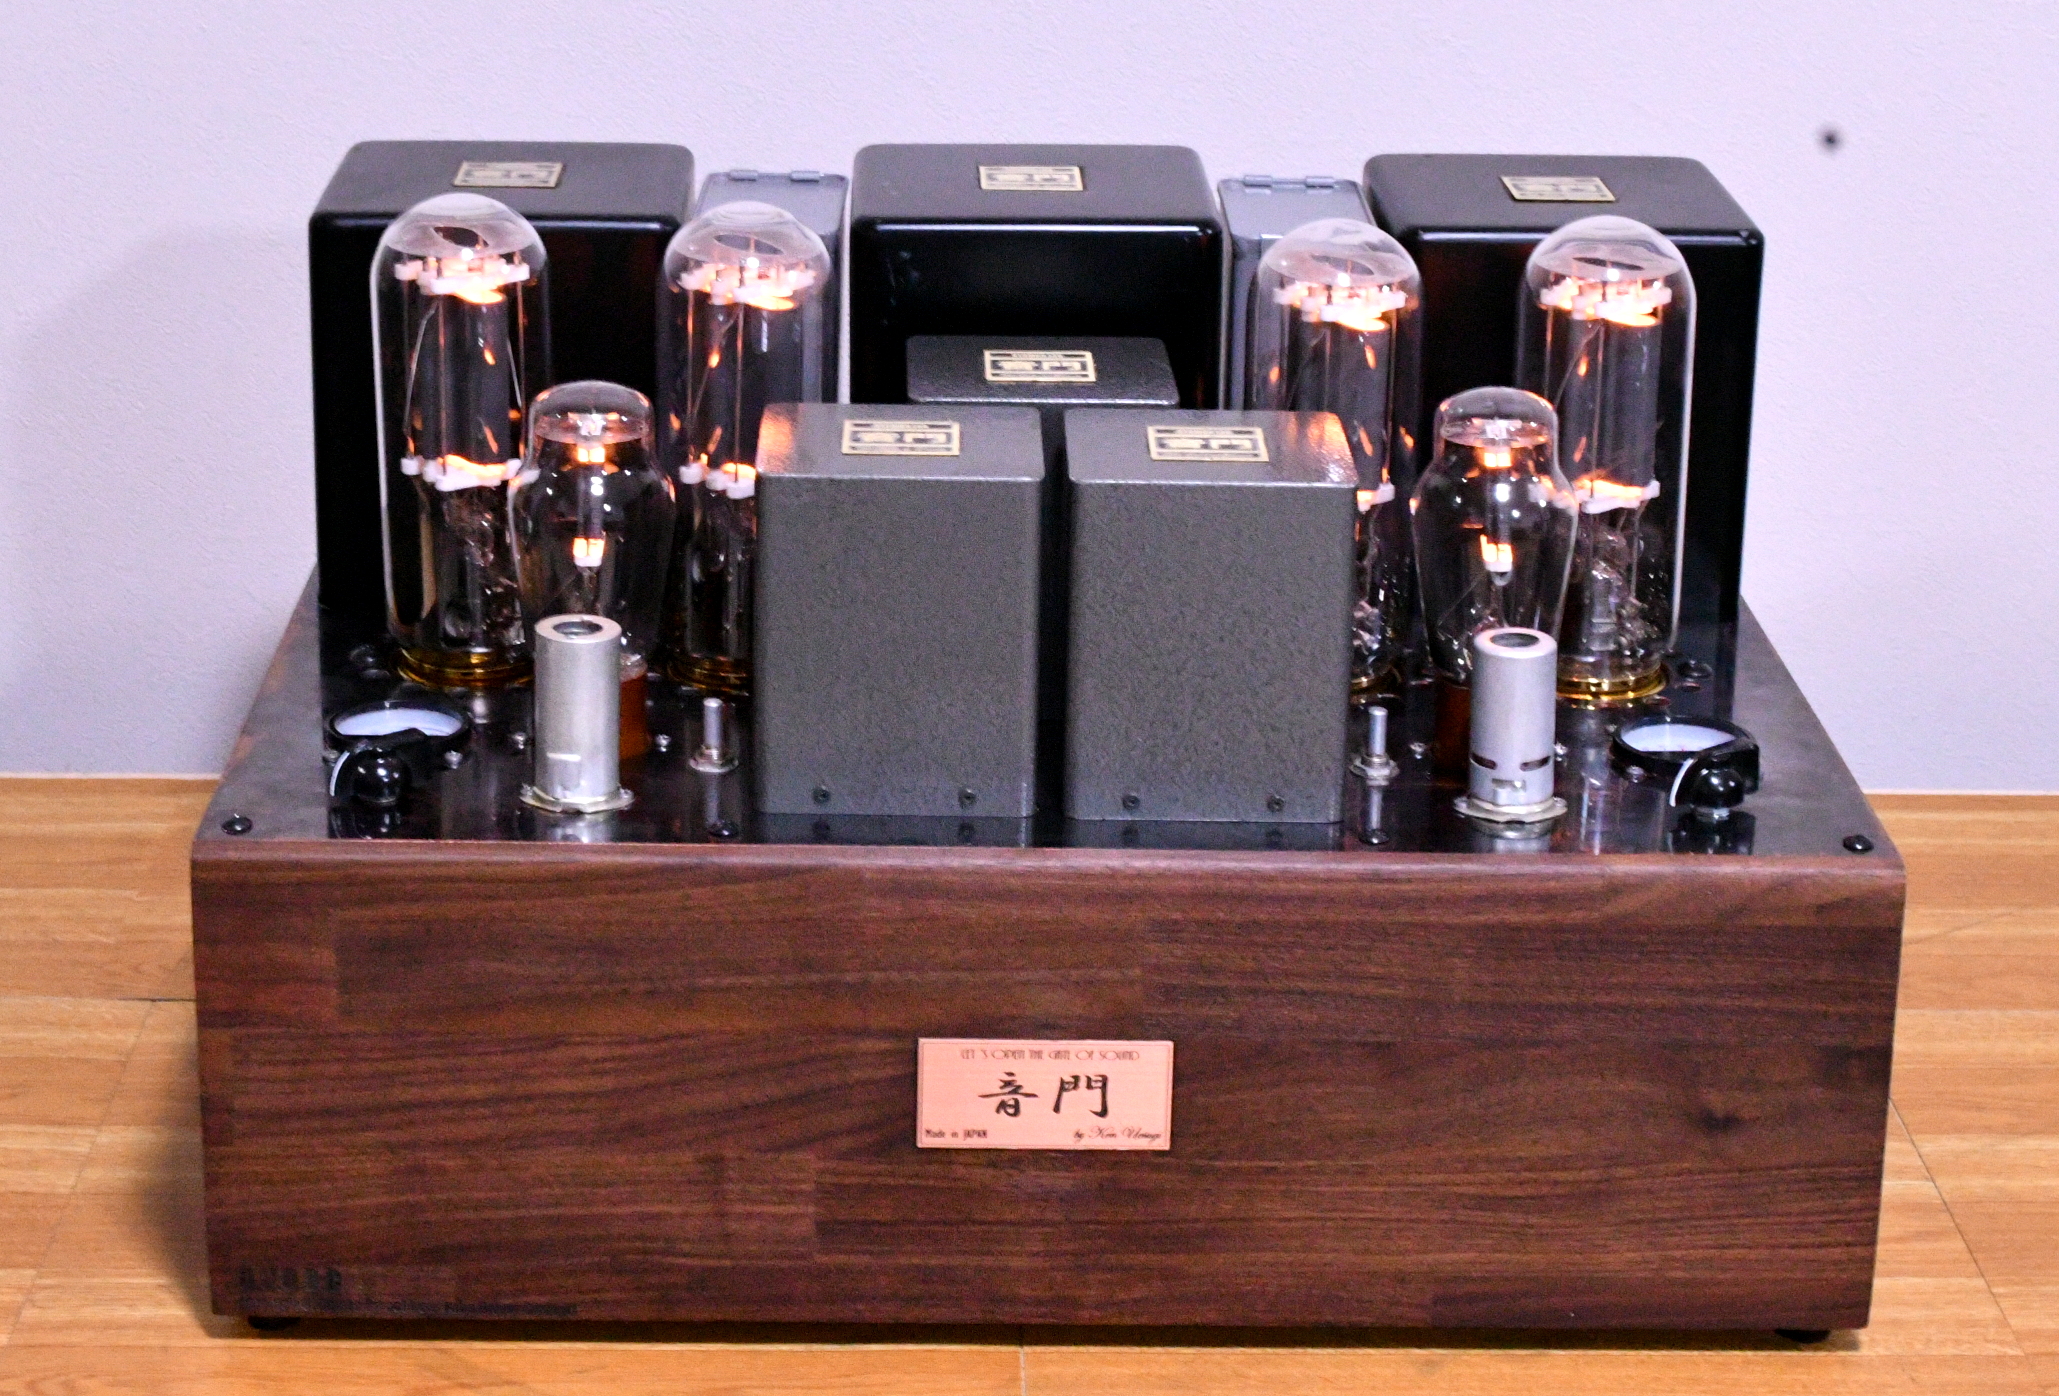 [PROTOTYPE] VT-62 drive 211 SE tube amplifier (O.U.D.D.C) using 211 as recitifier tube